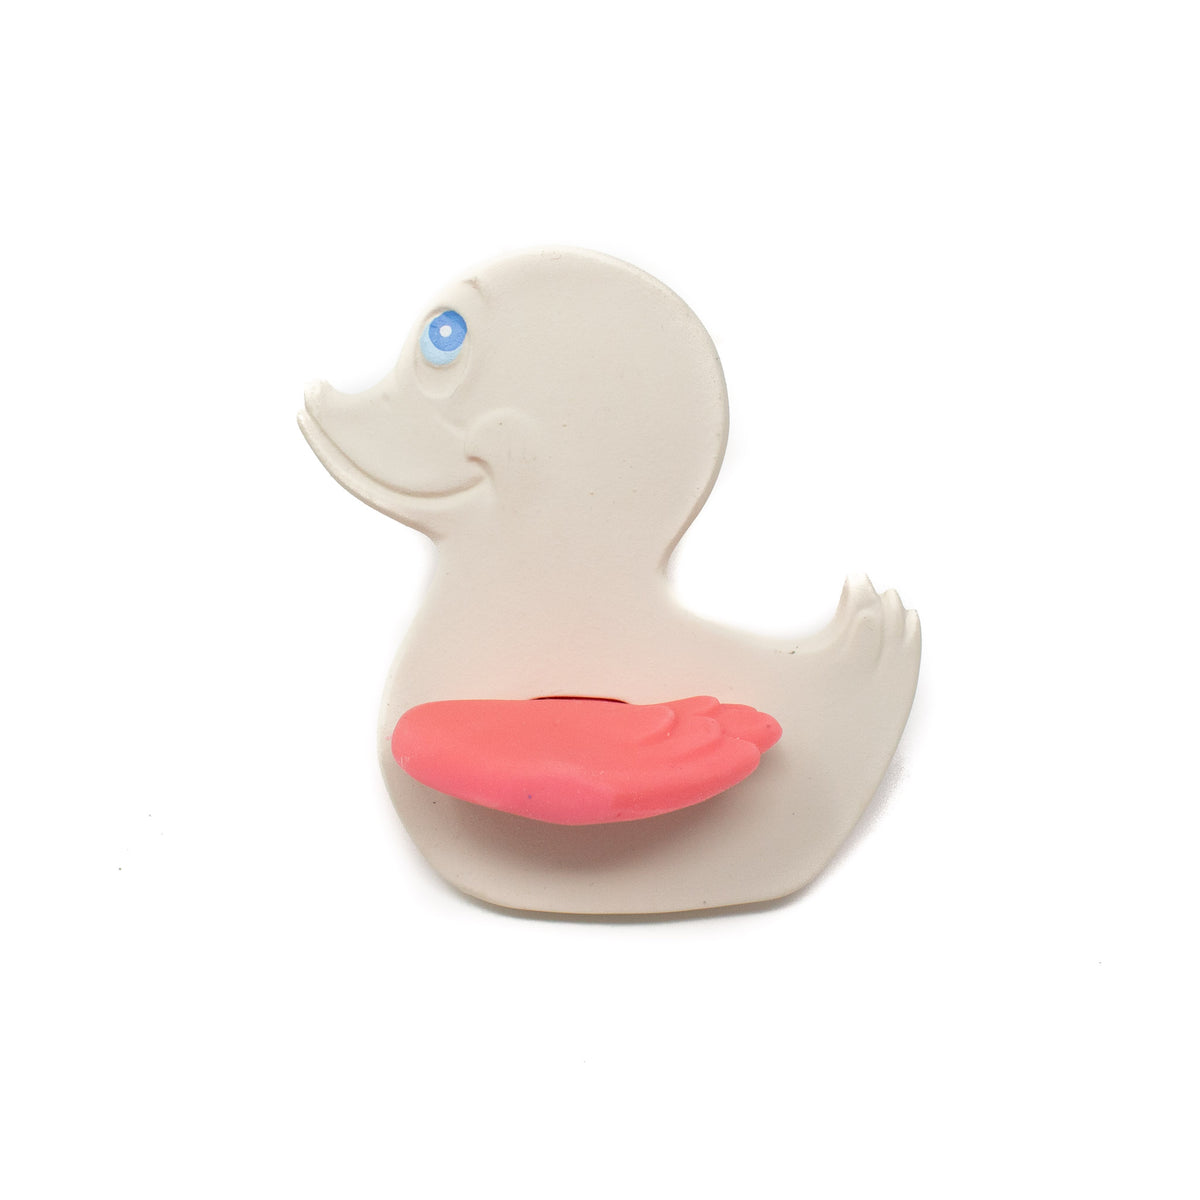 Duckling teething toy